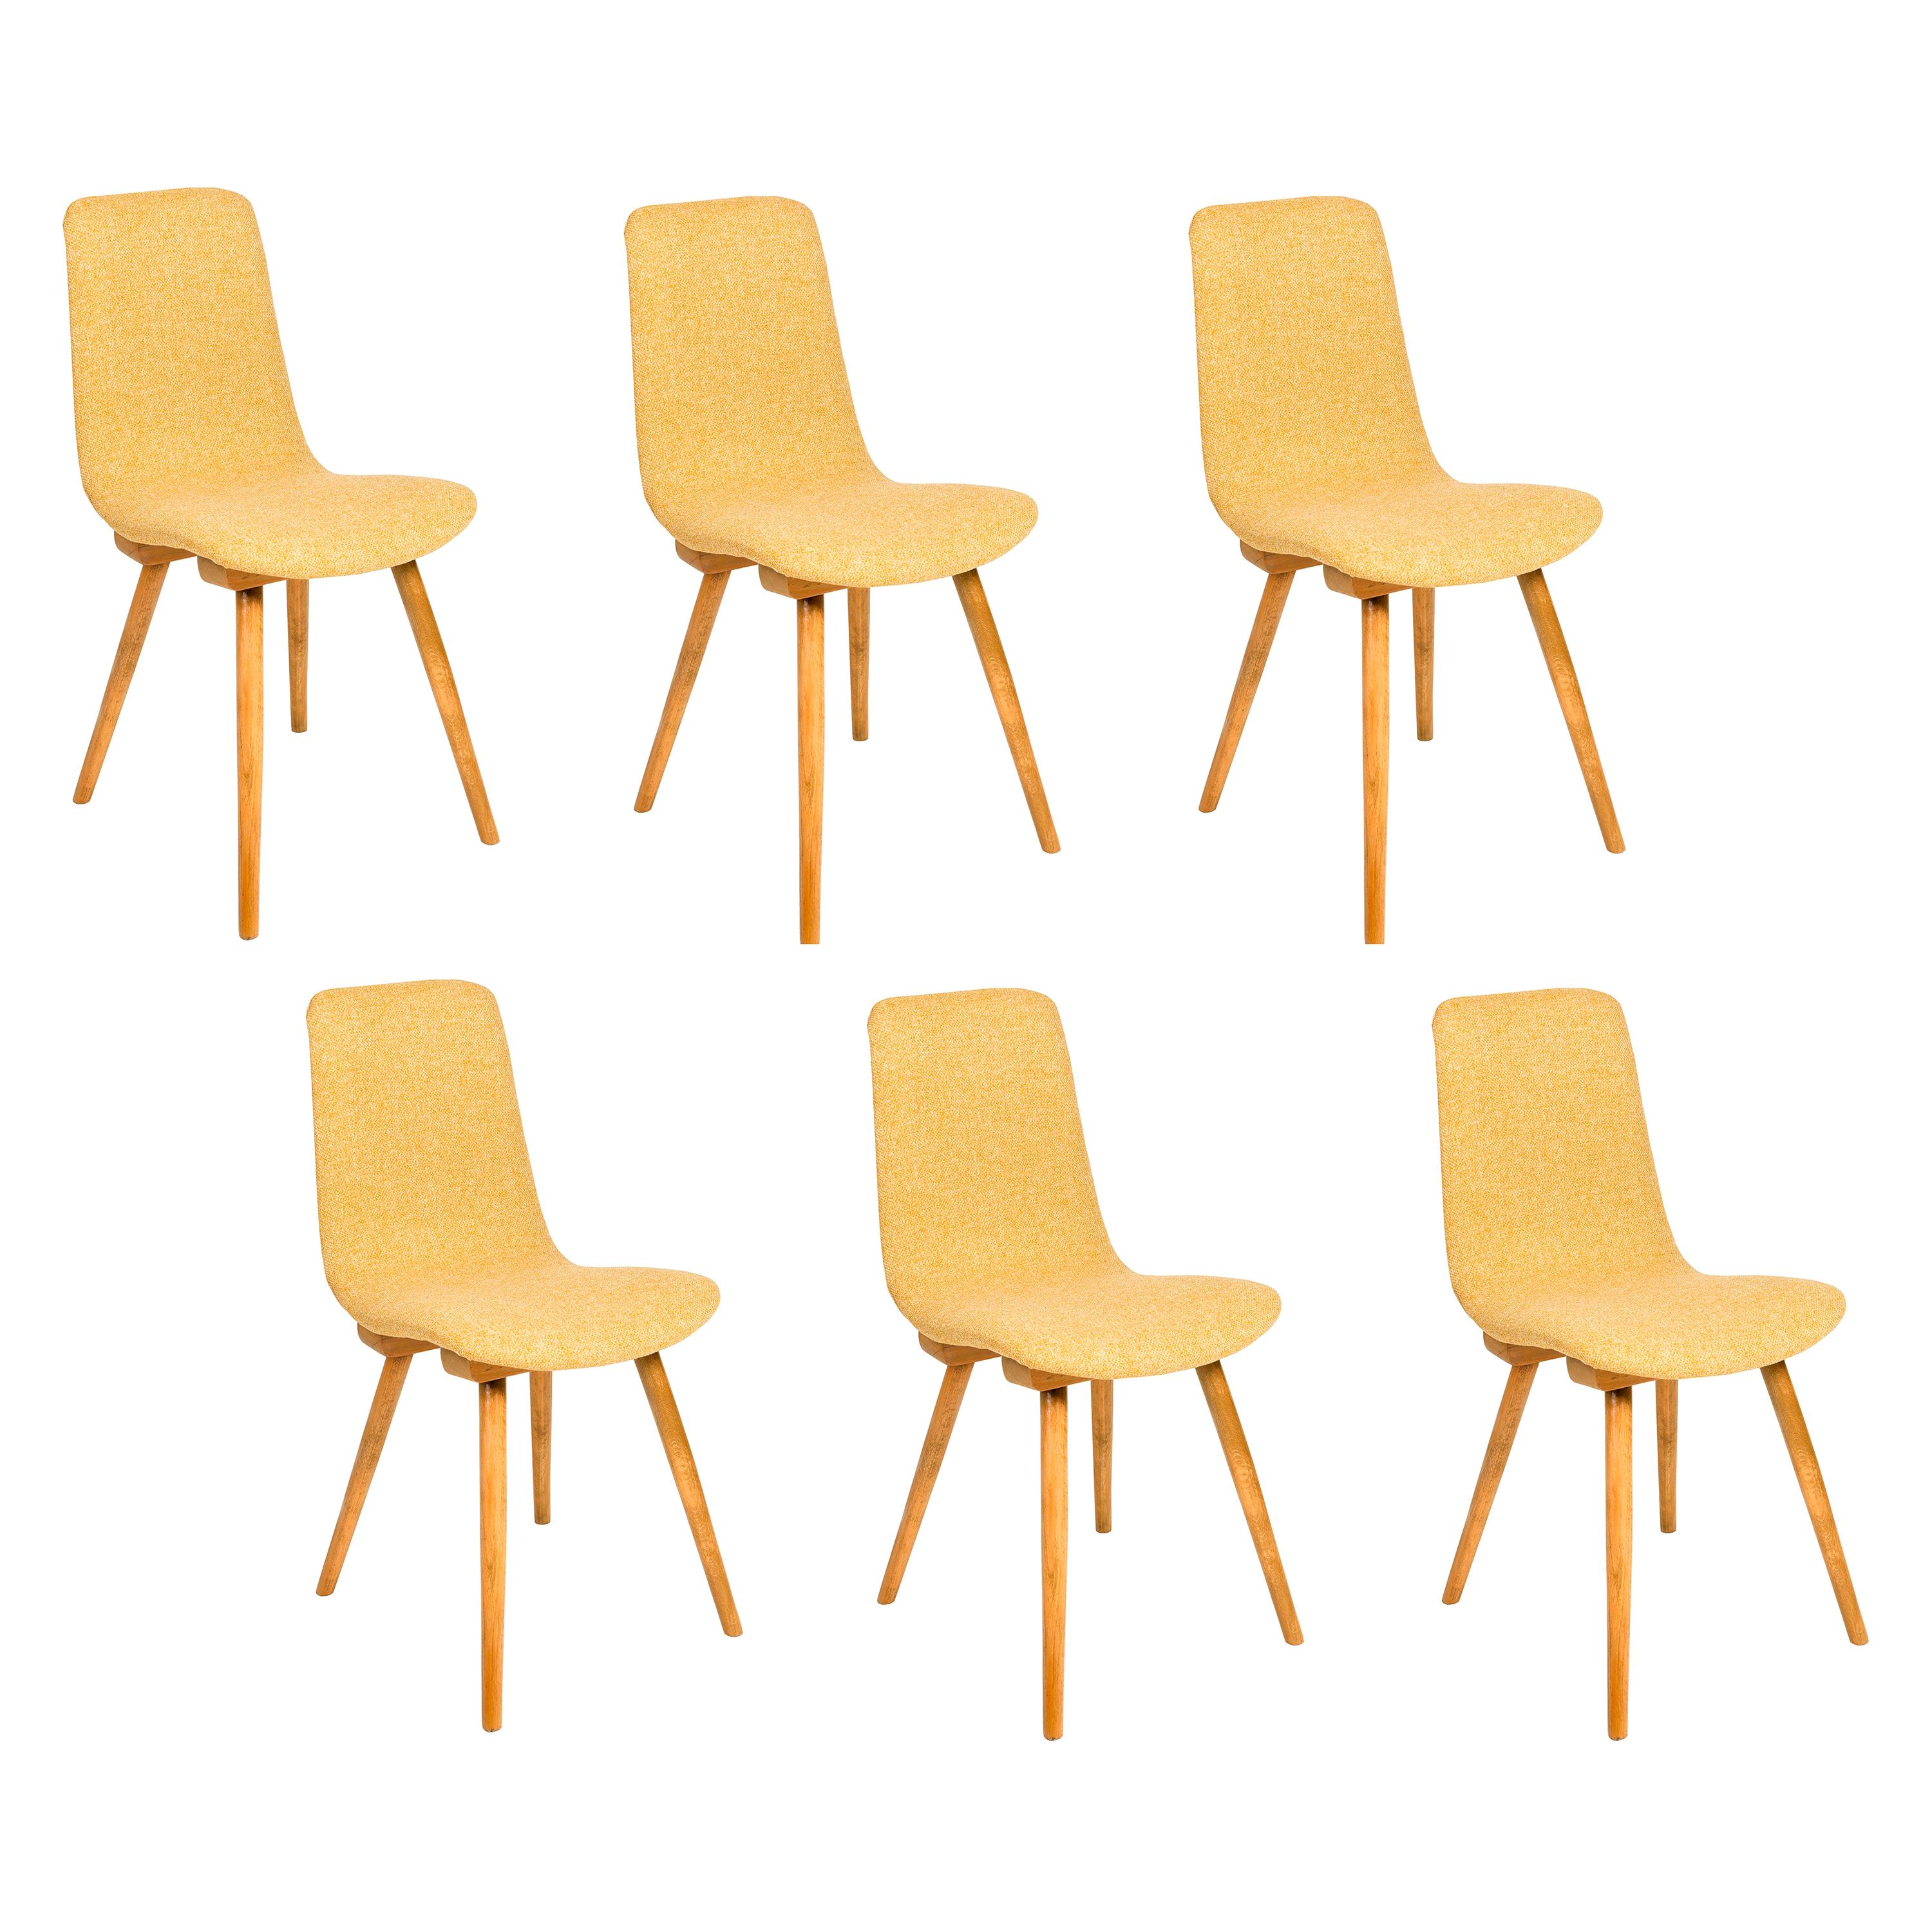 Set of Six 20th Century Fameg Yellow Vintage Chairs, 1960s, Poland